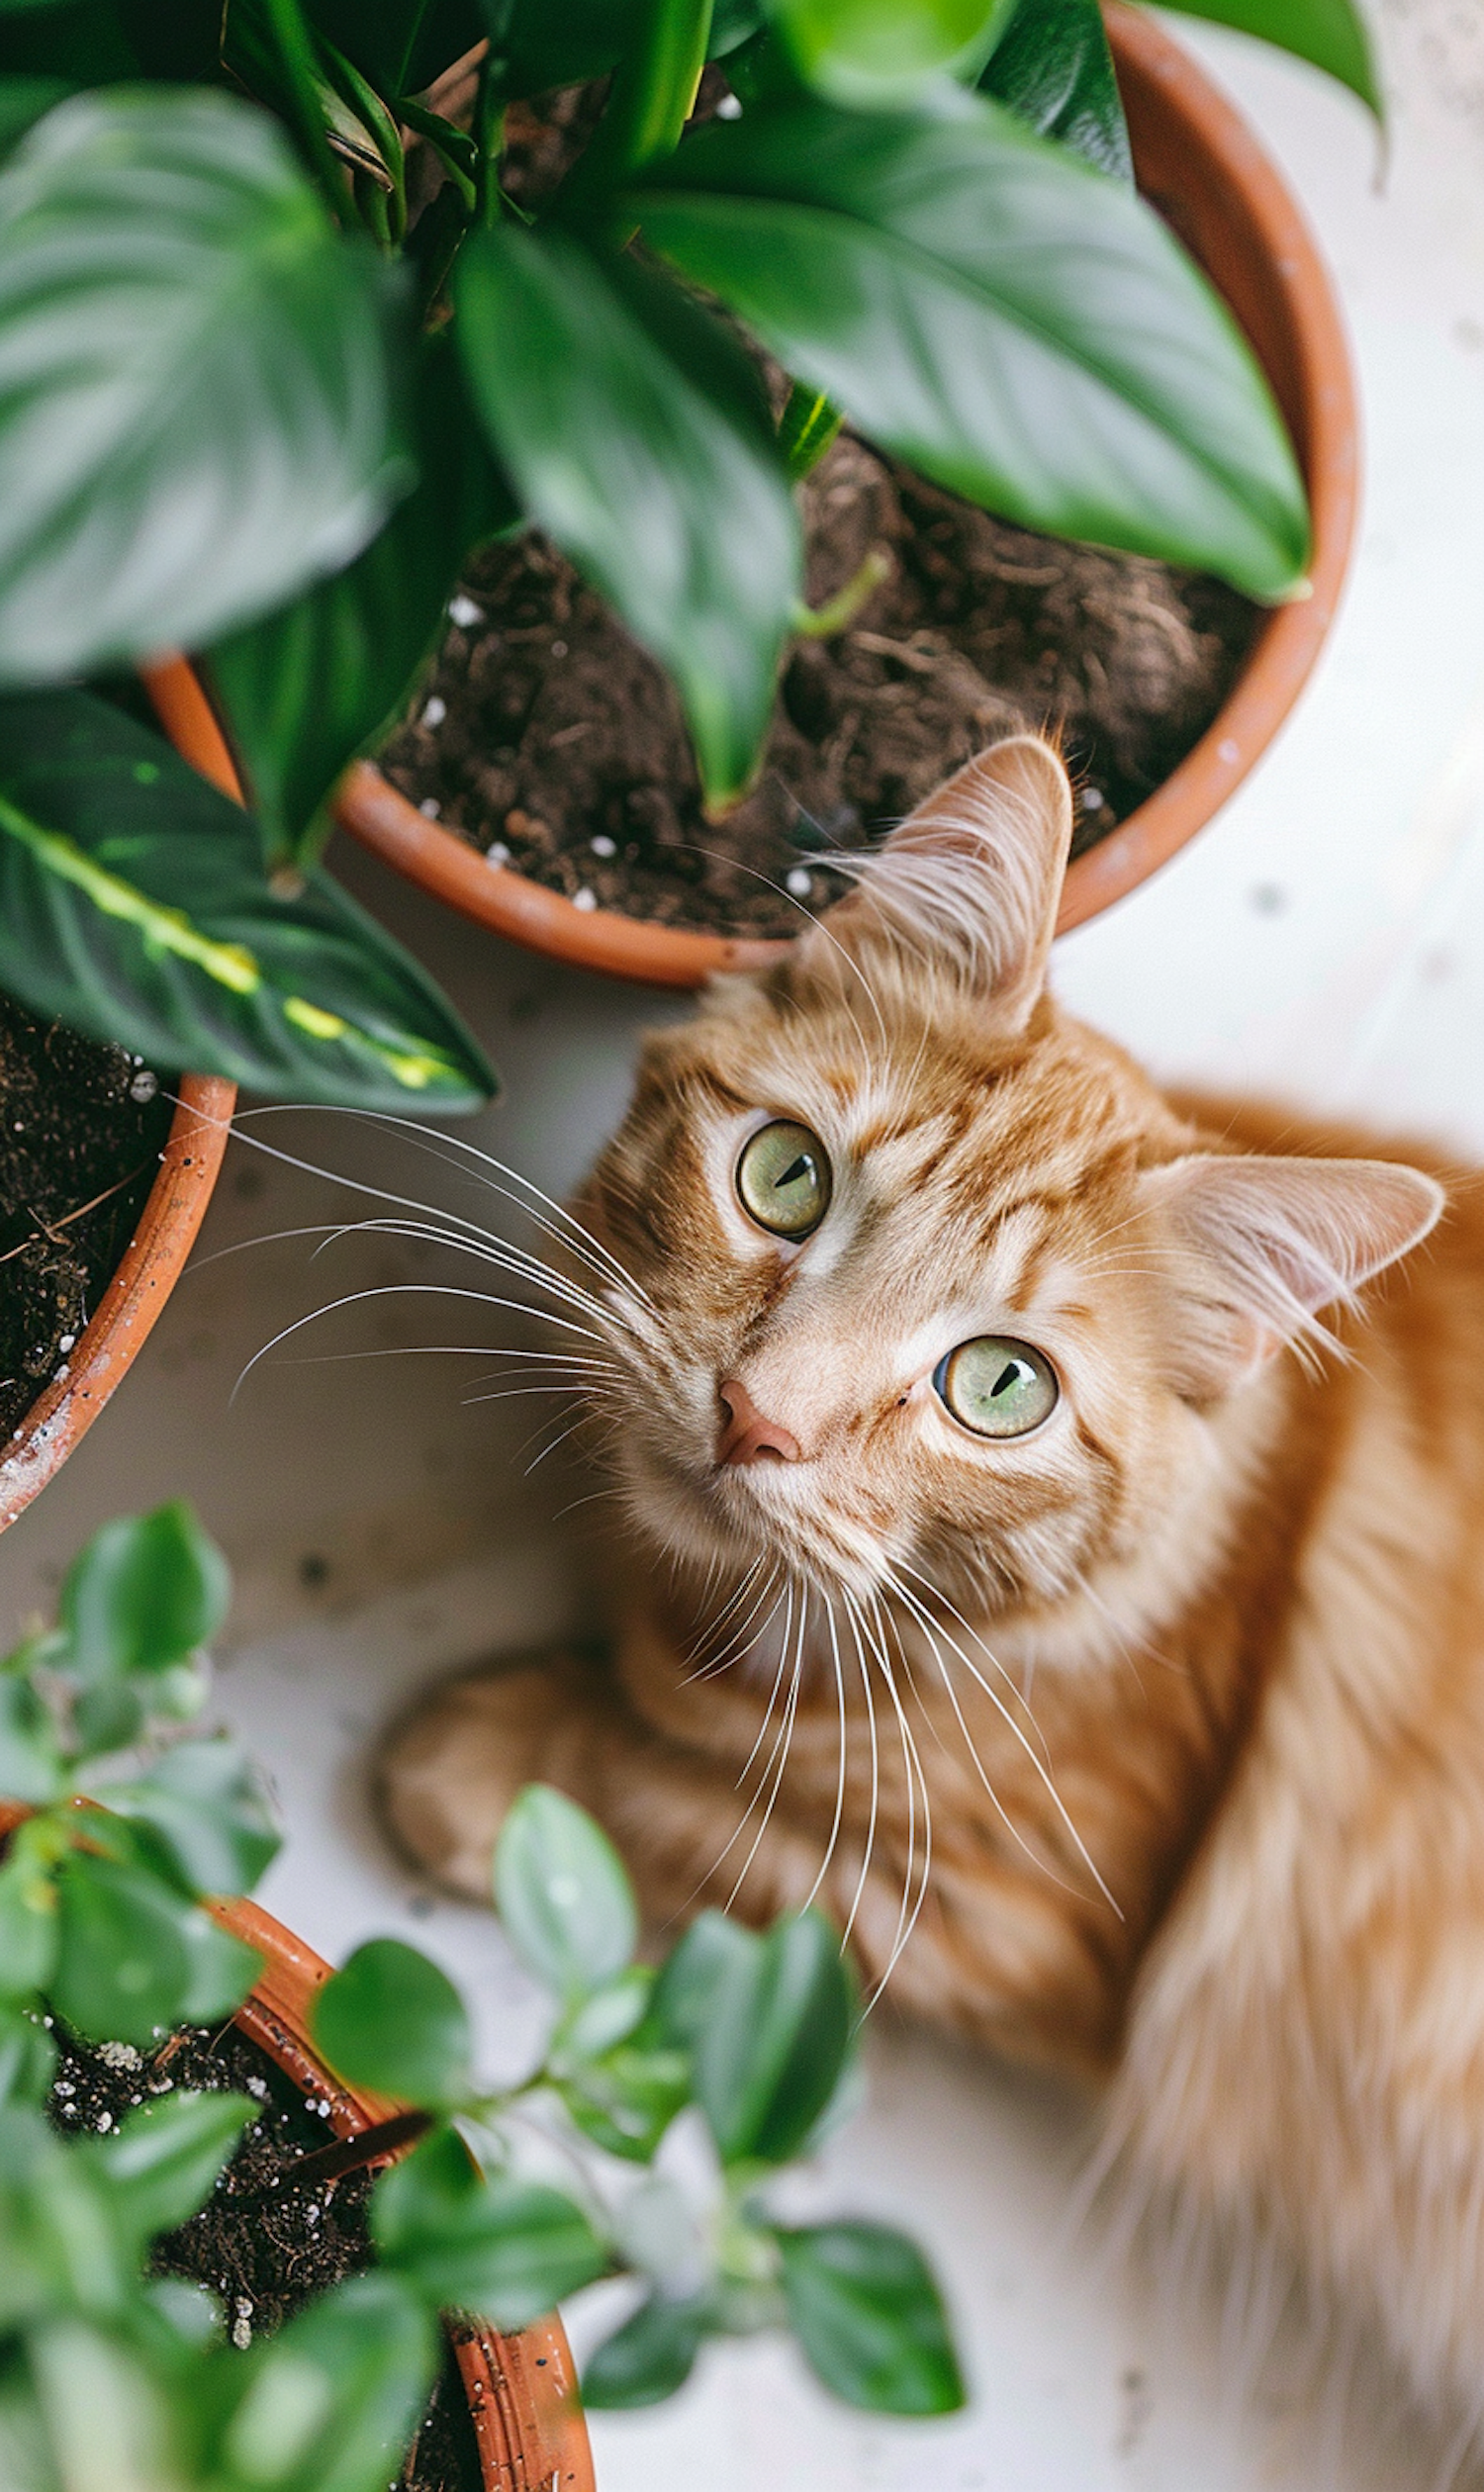 Inquisitive Orange Tabby Cat Amidst Lush Greenery